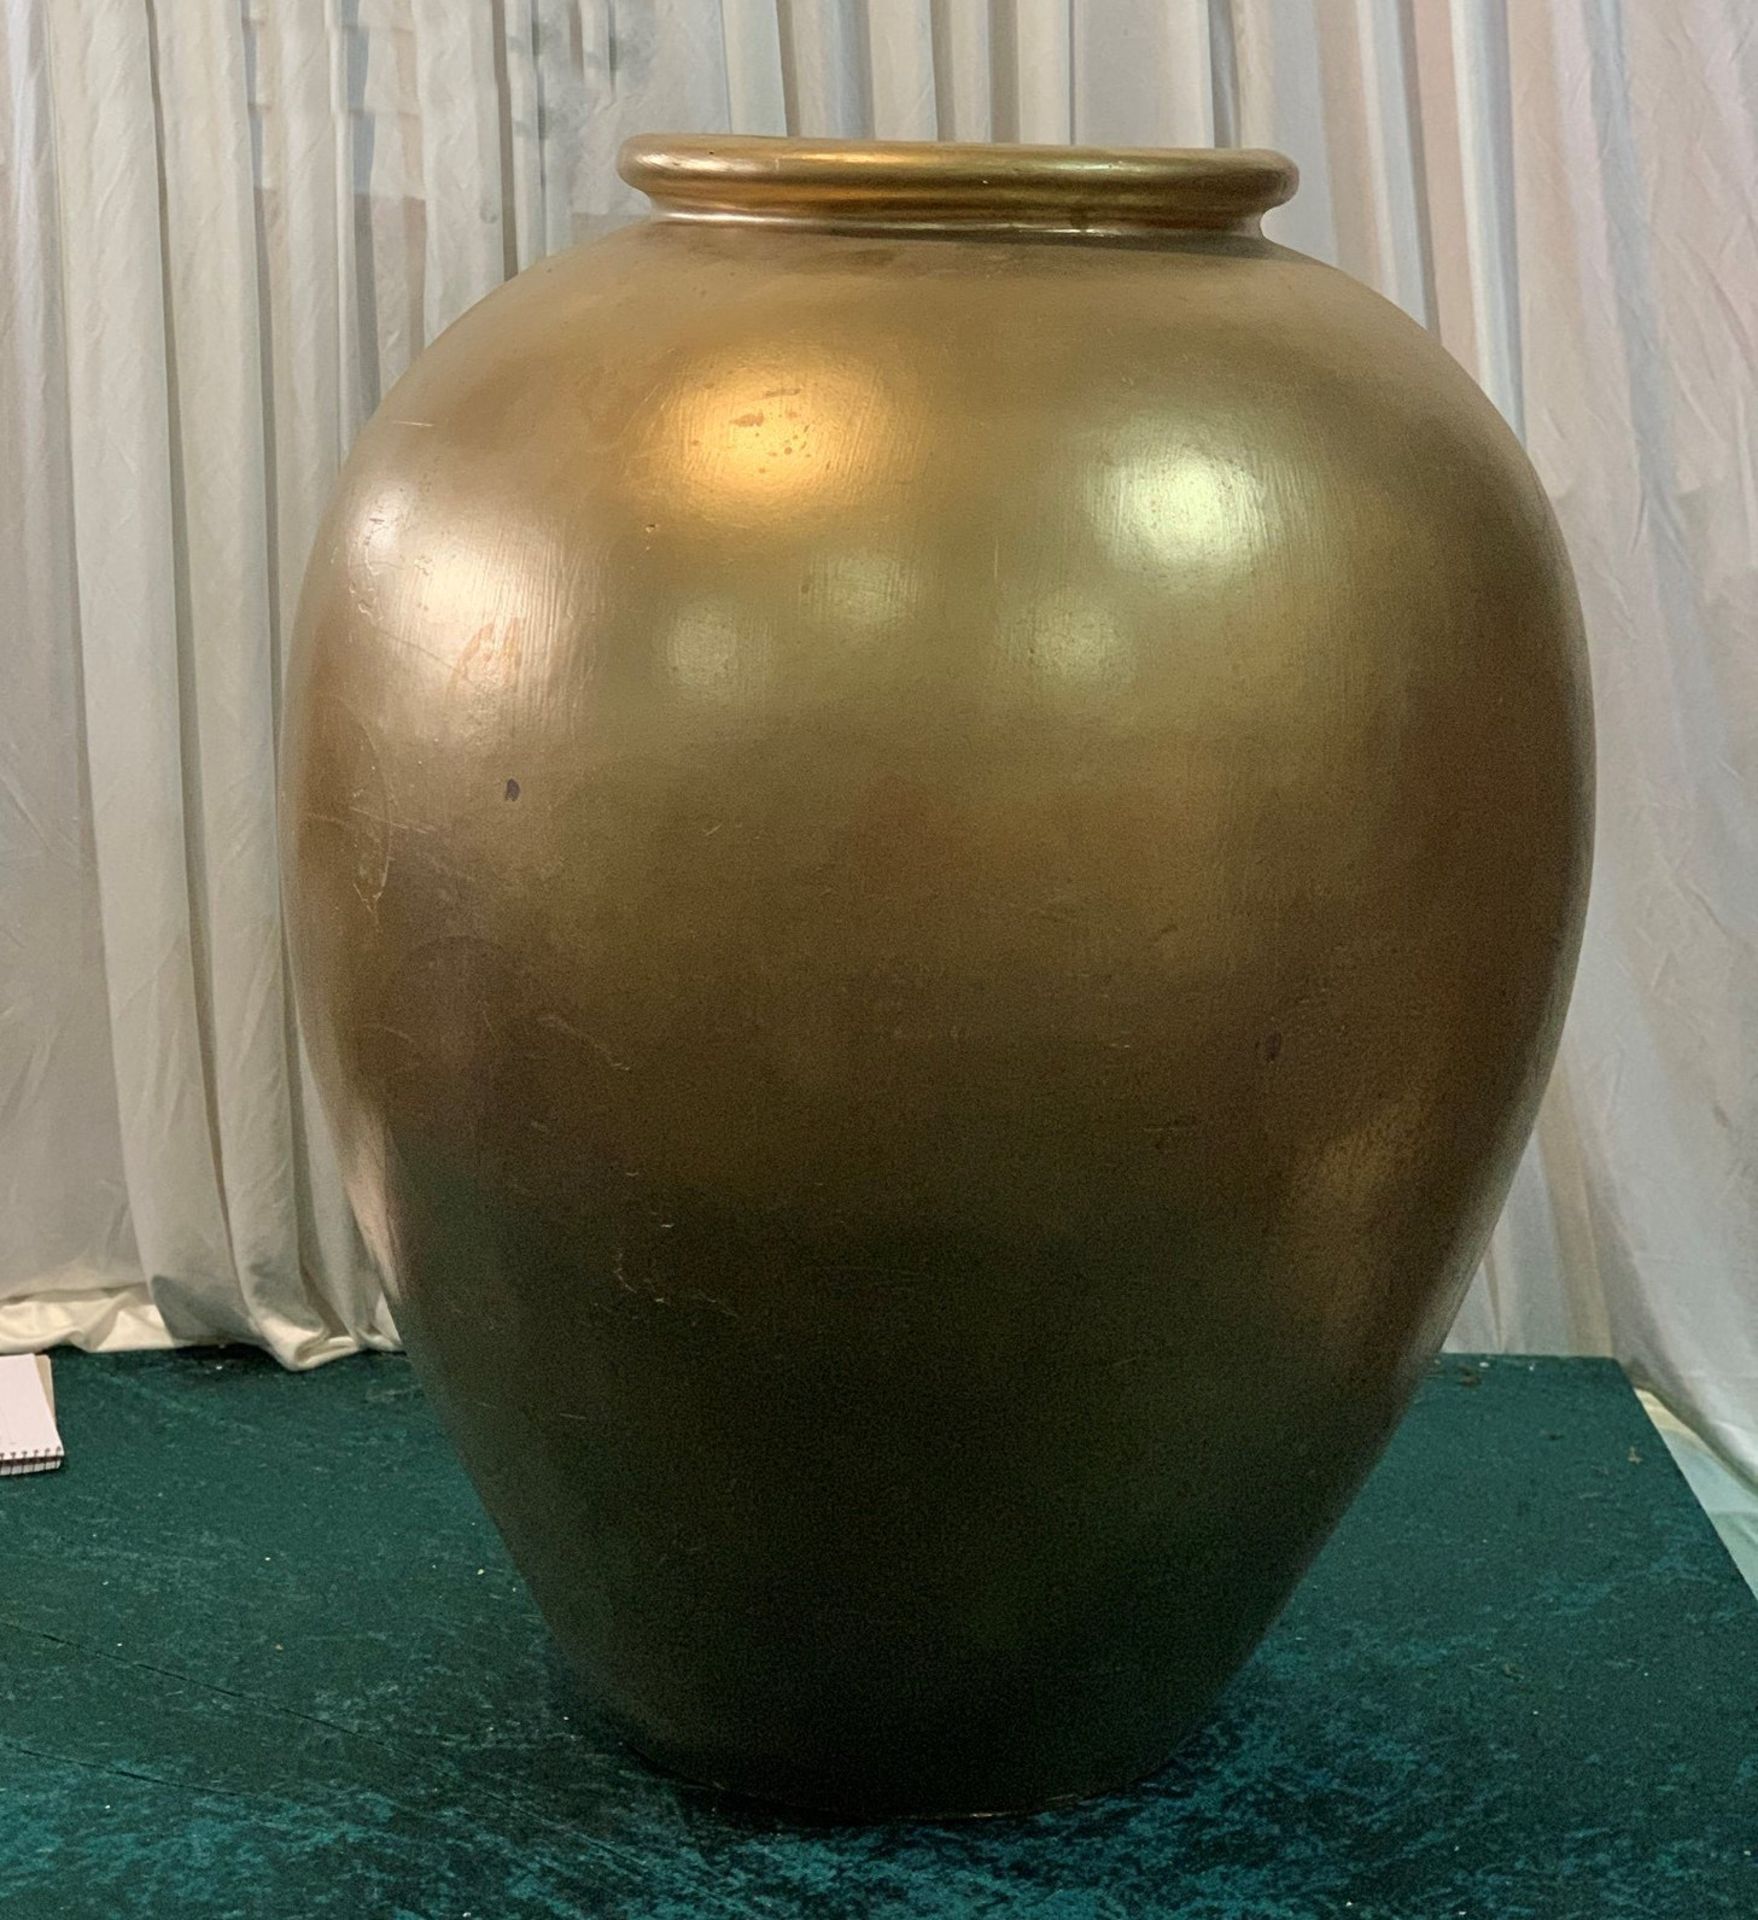 2 x Large Arabian Pots in Gold - Dimensions: 82x72cm - Ref: Lot 105 - CL548 - Location: Near